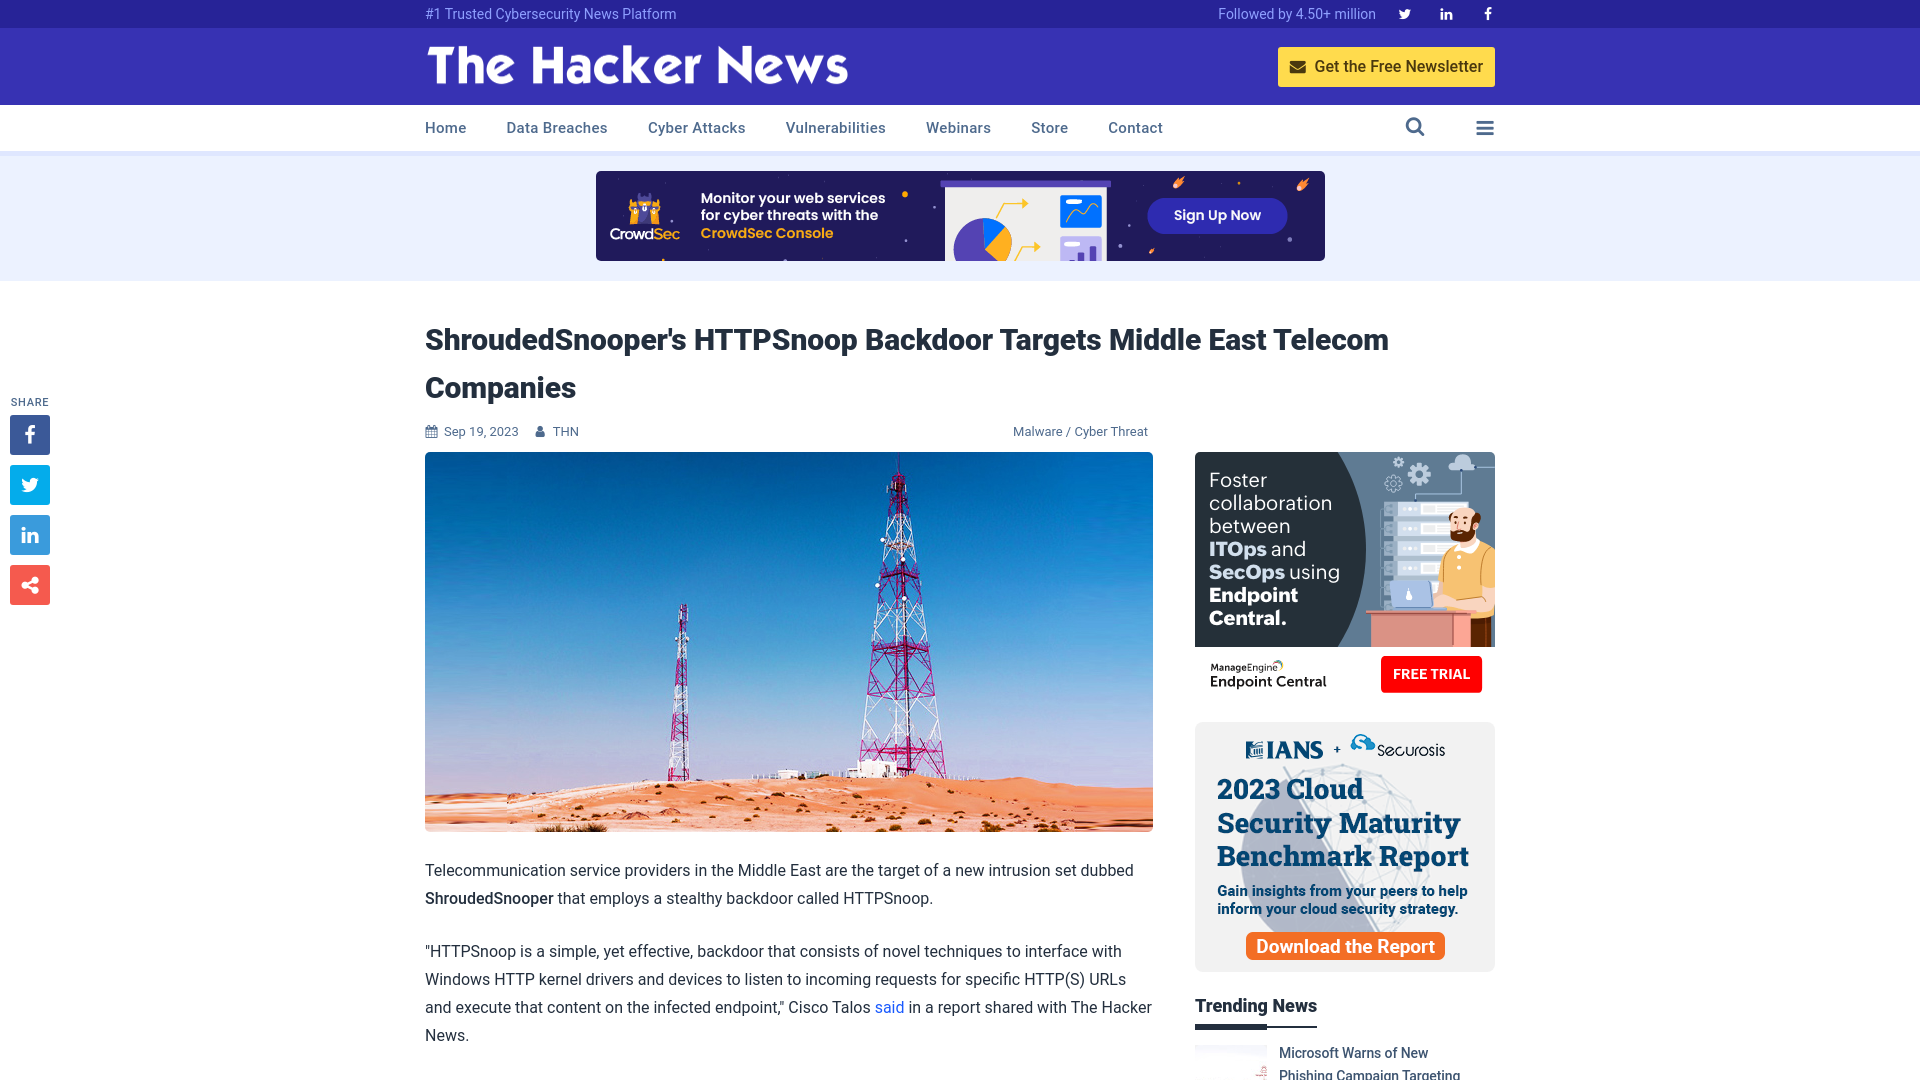 ShroudedSnooper's HTTPSnoop Backdoor Targets Middle East Telecom Companies